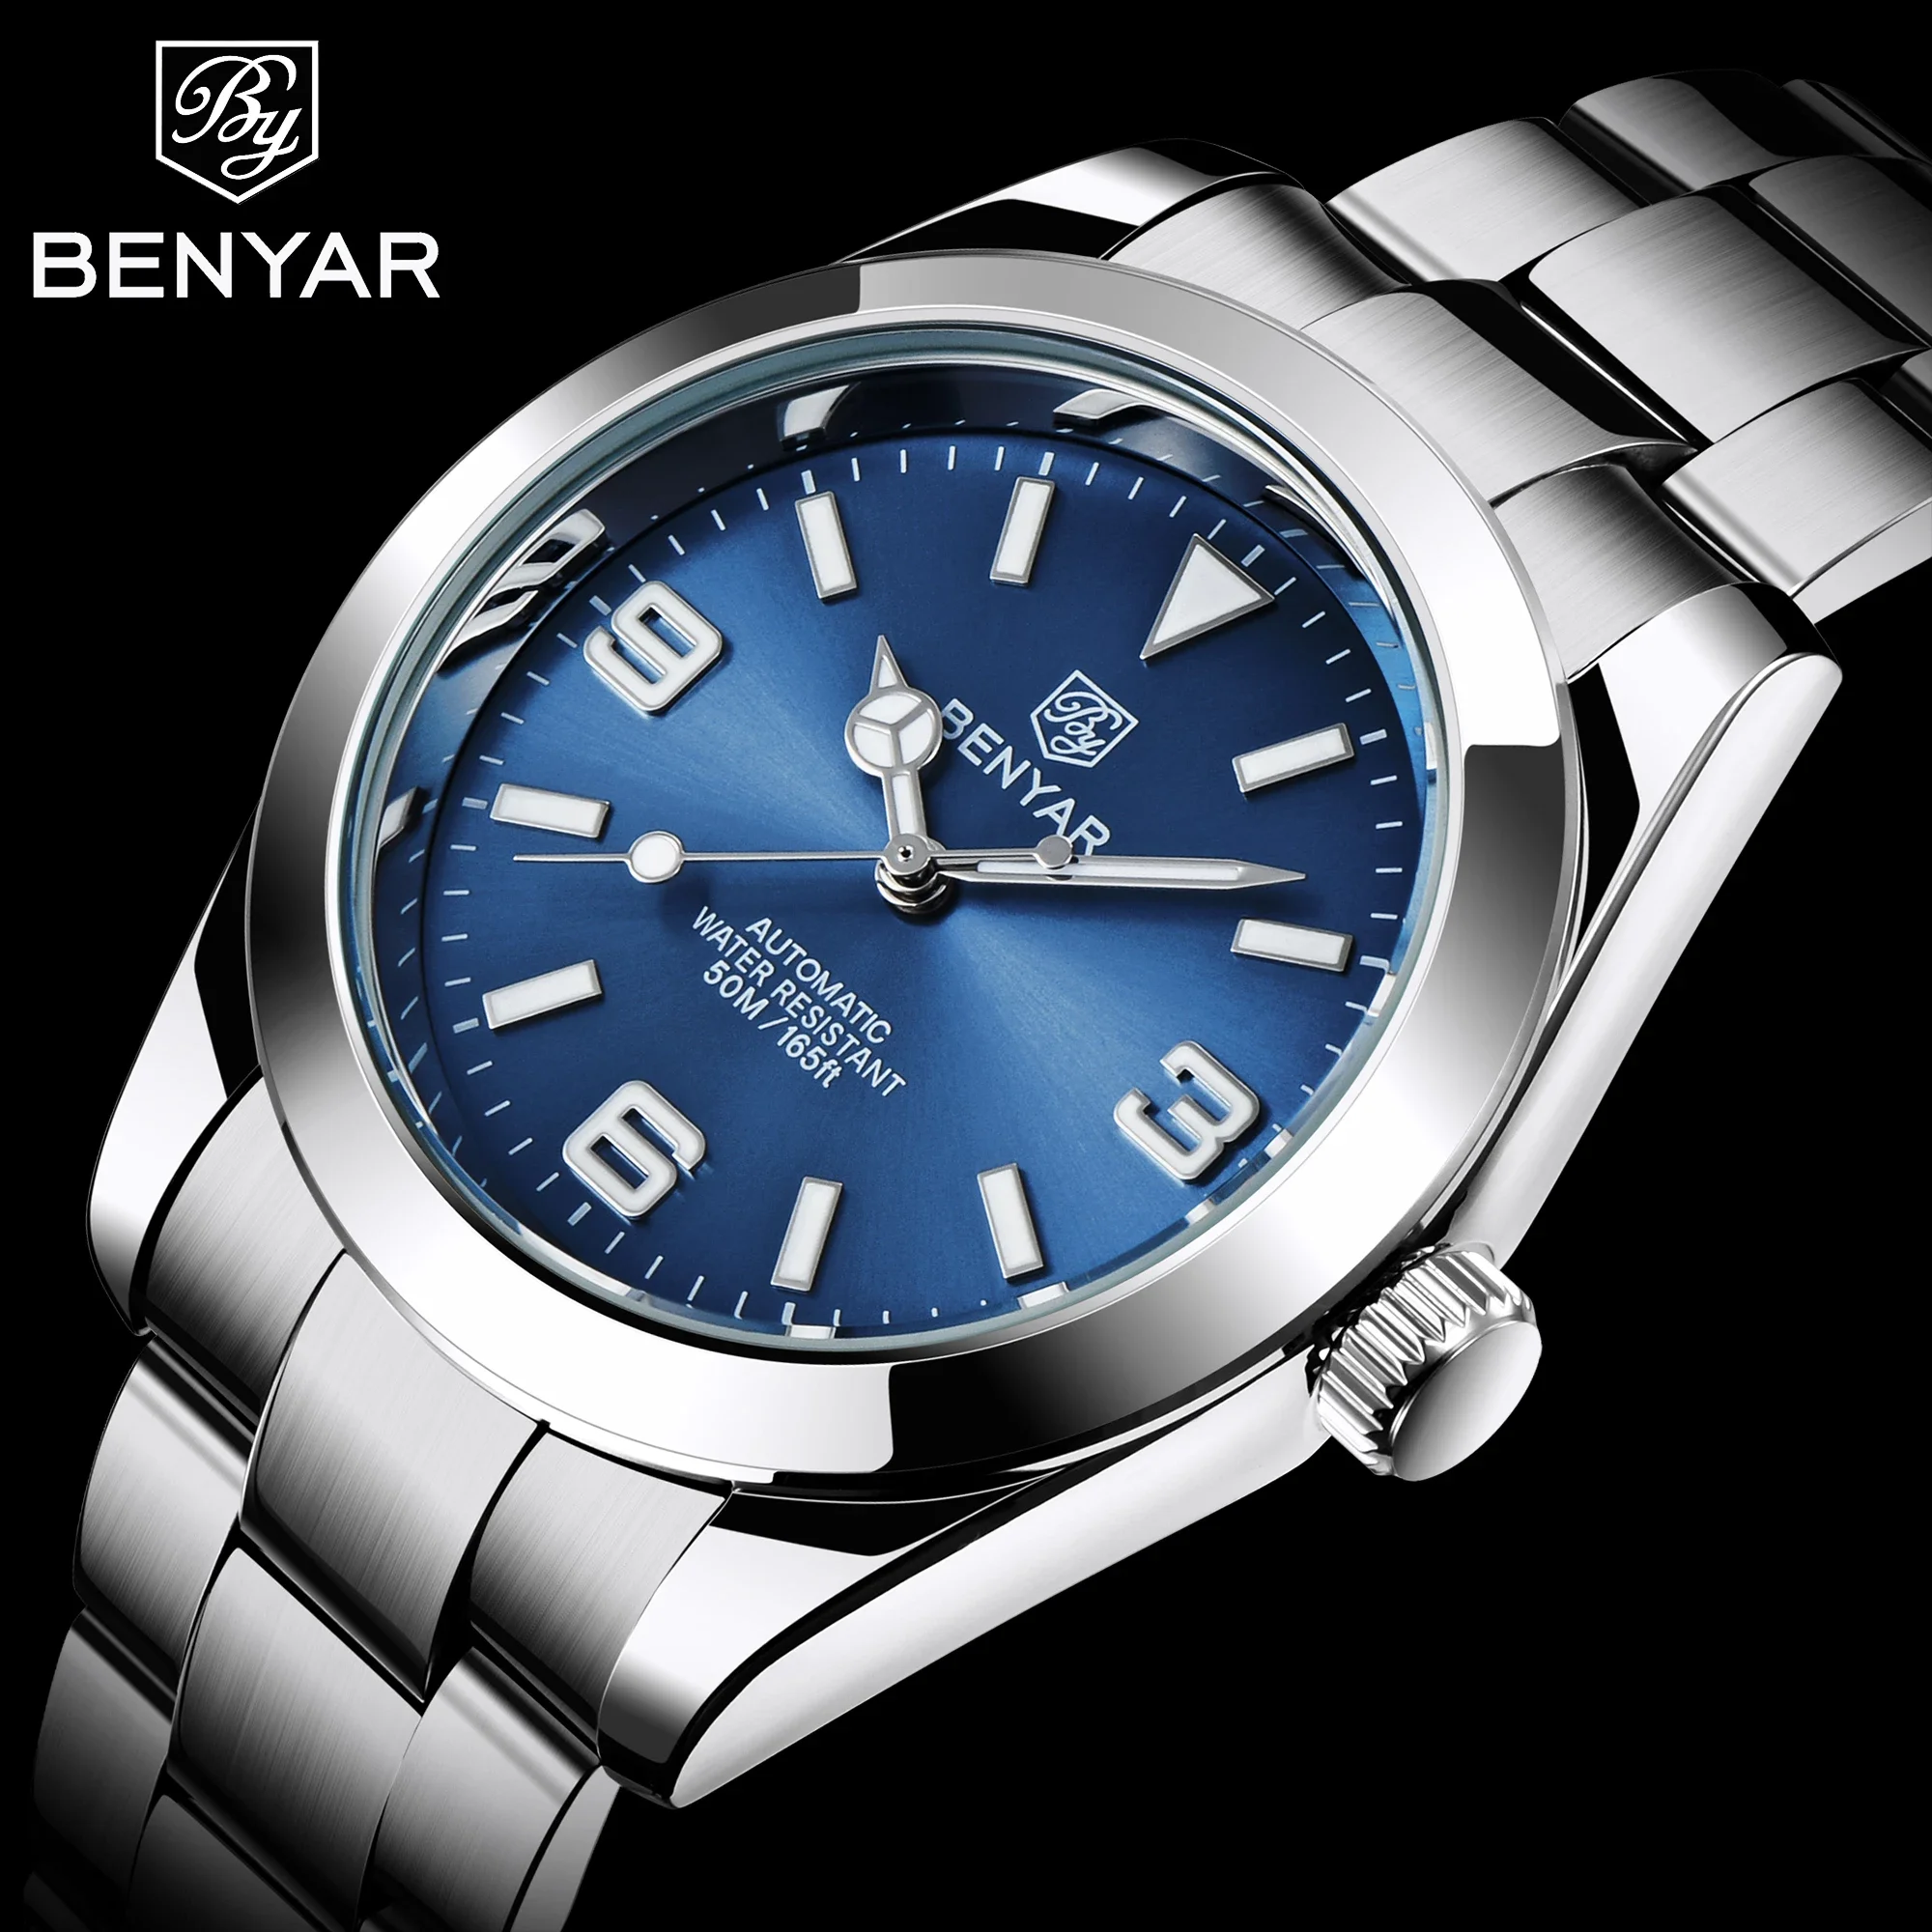 

BENYAR 2020 New Stainless Steel Automatic Men Watches Brand Waterproof Luxury Men Mechanical Wristwatch Relogio Masculino 5177M, Shown